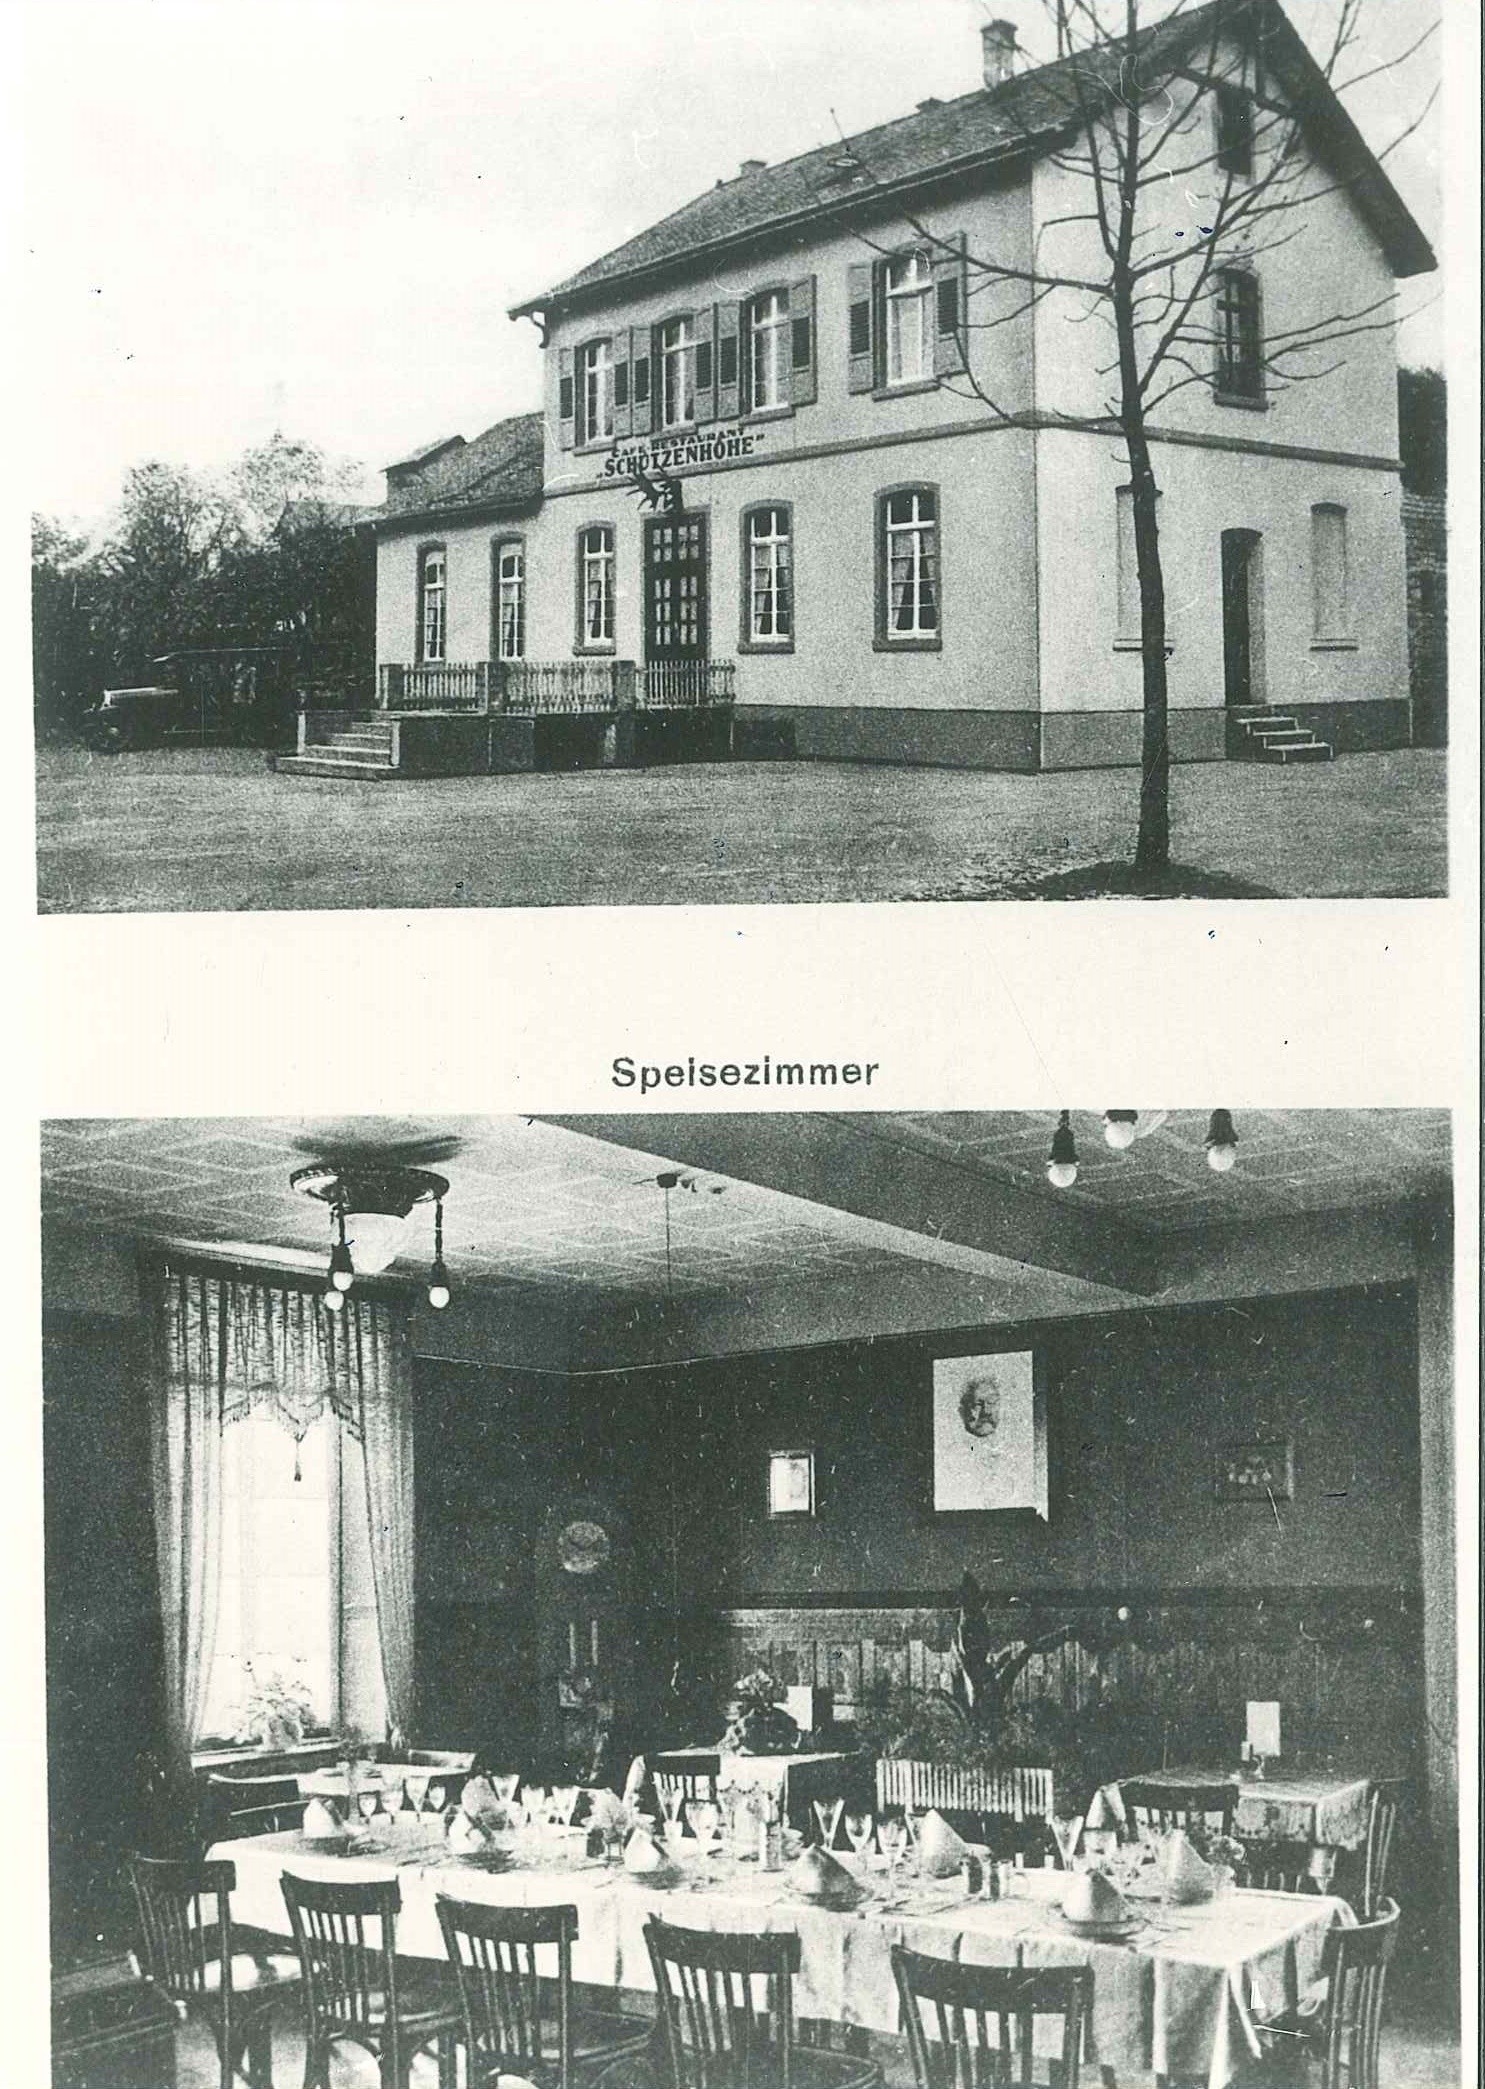 Restaurant "Schützenhöhe", Bendorf am Rhein, 1929 (REM CC BY-NC-SA)